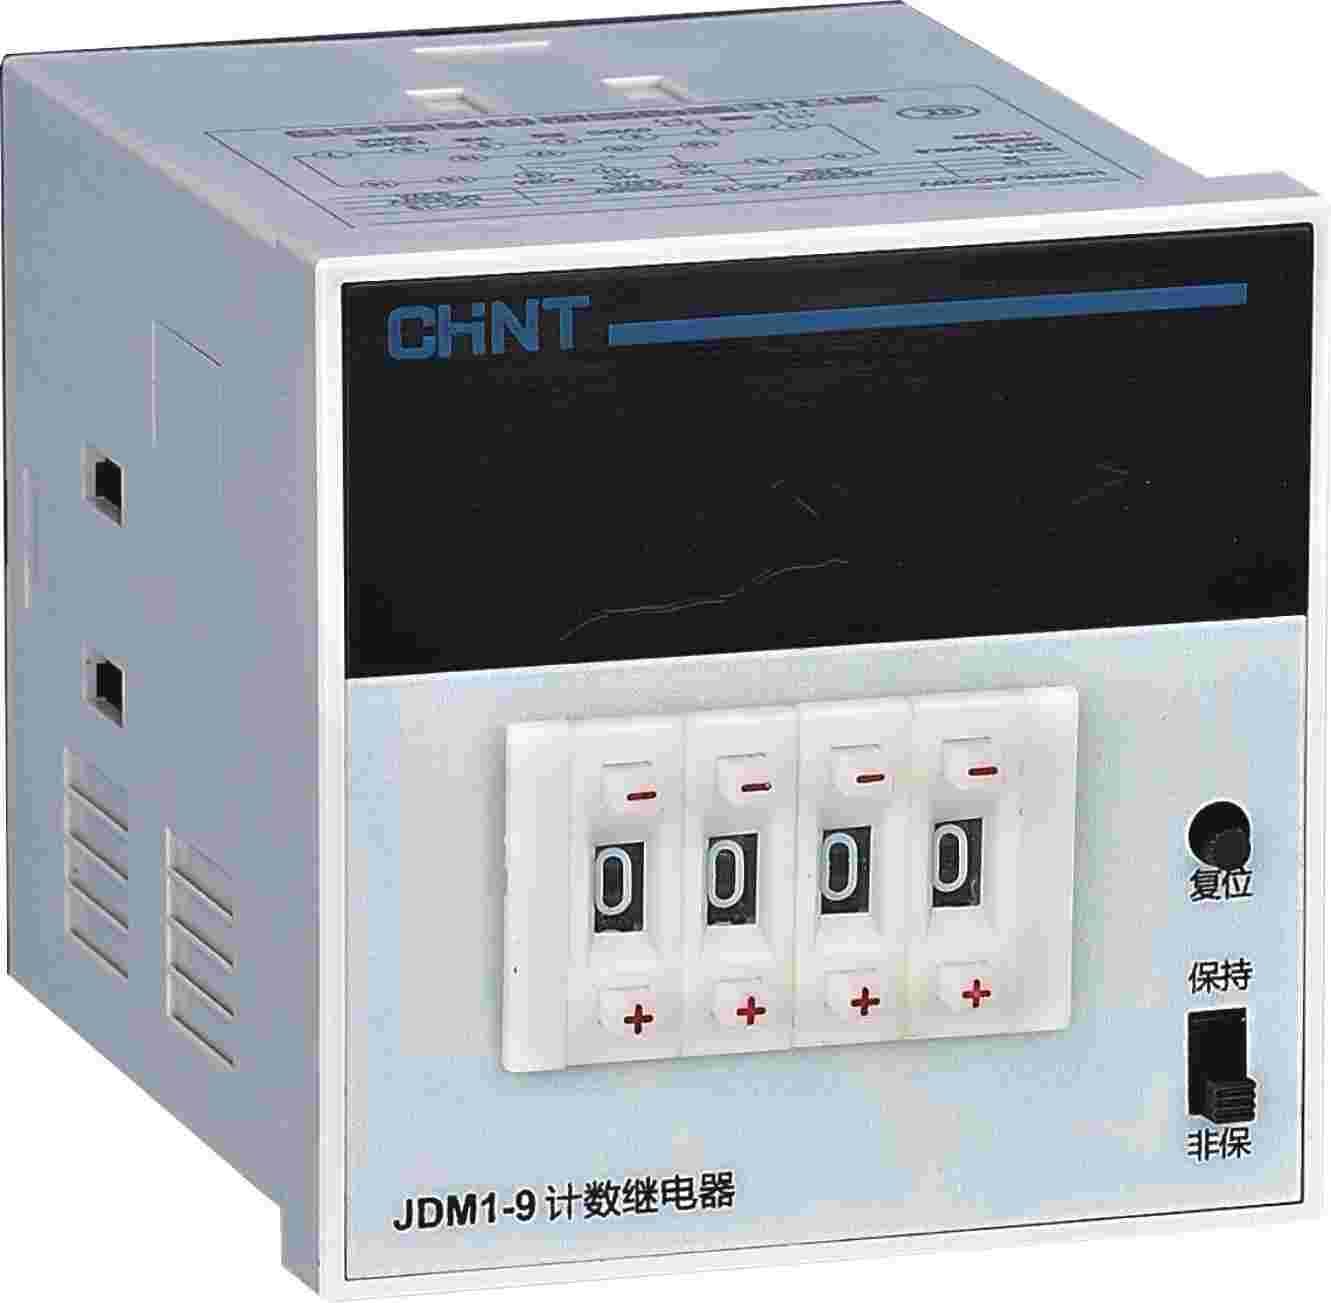 JDM1-9 计数继电器侧俯图.png